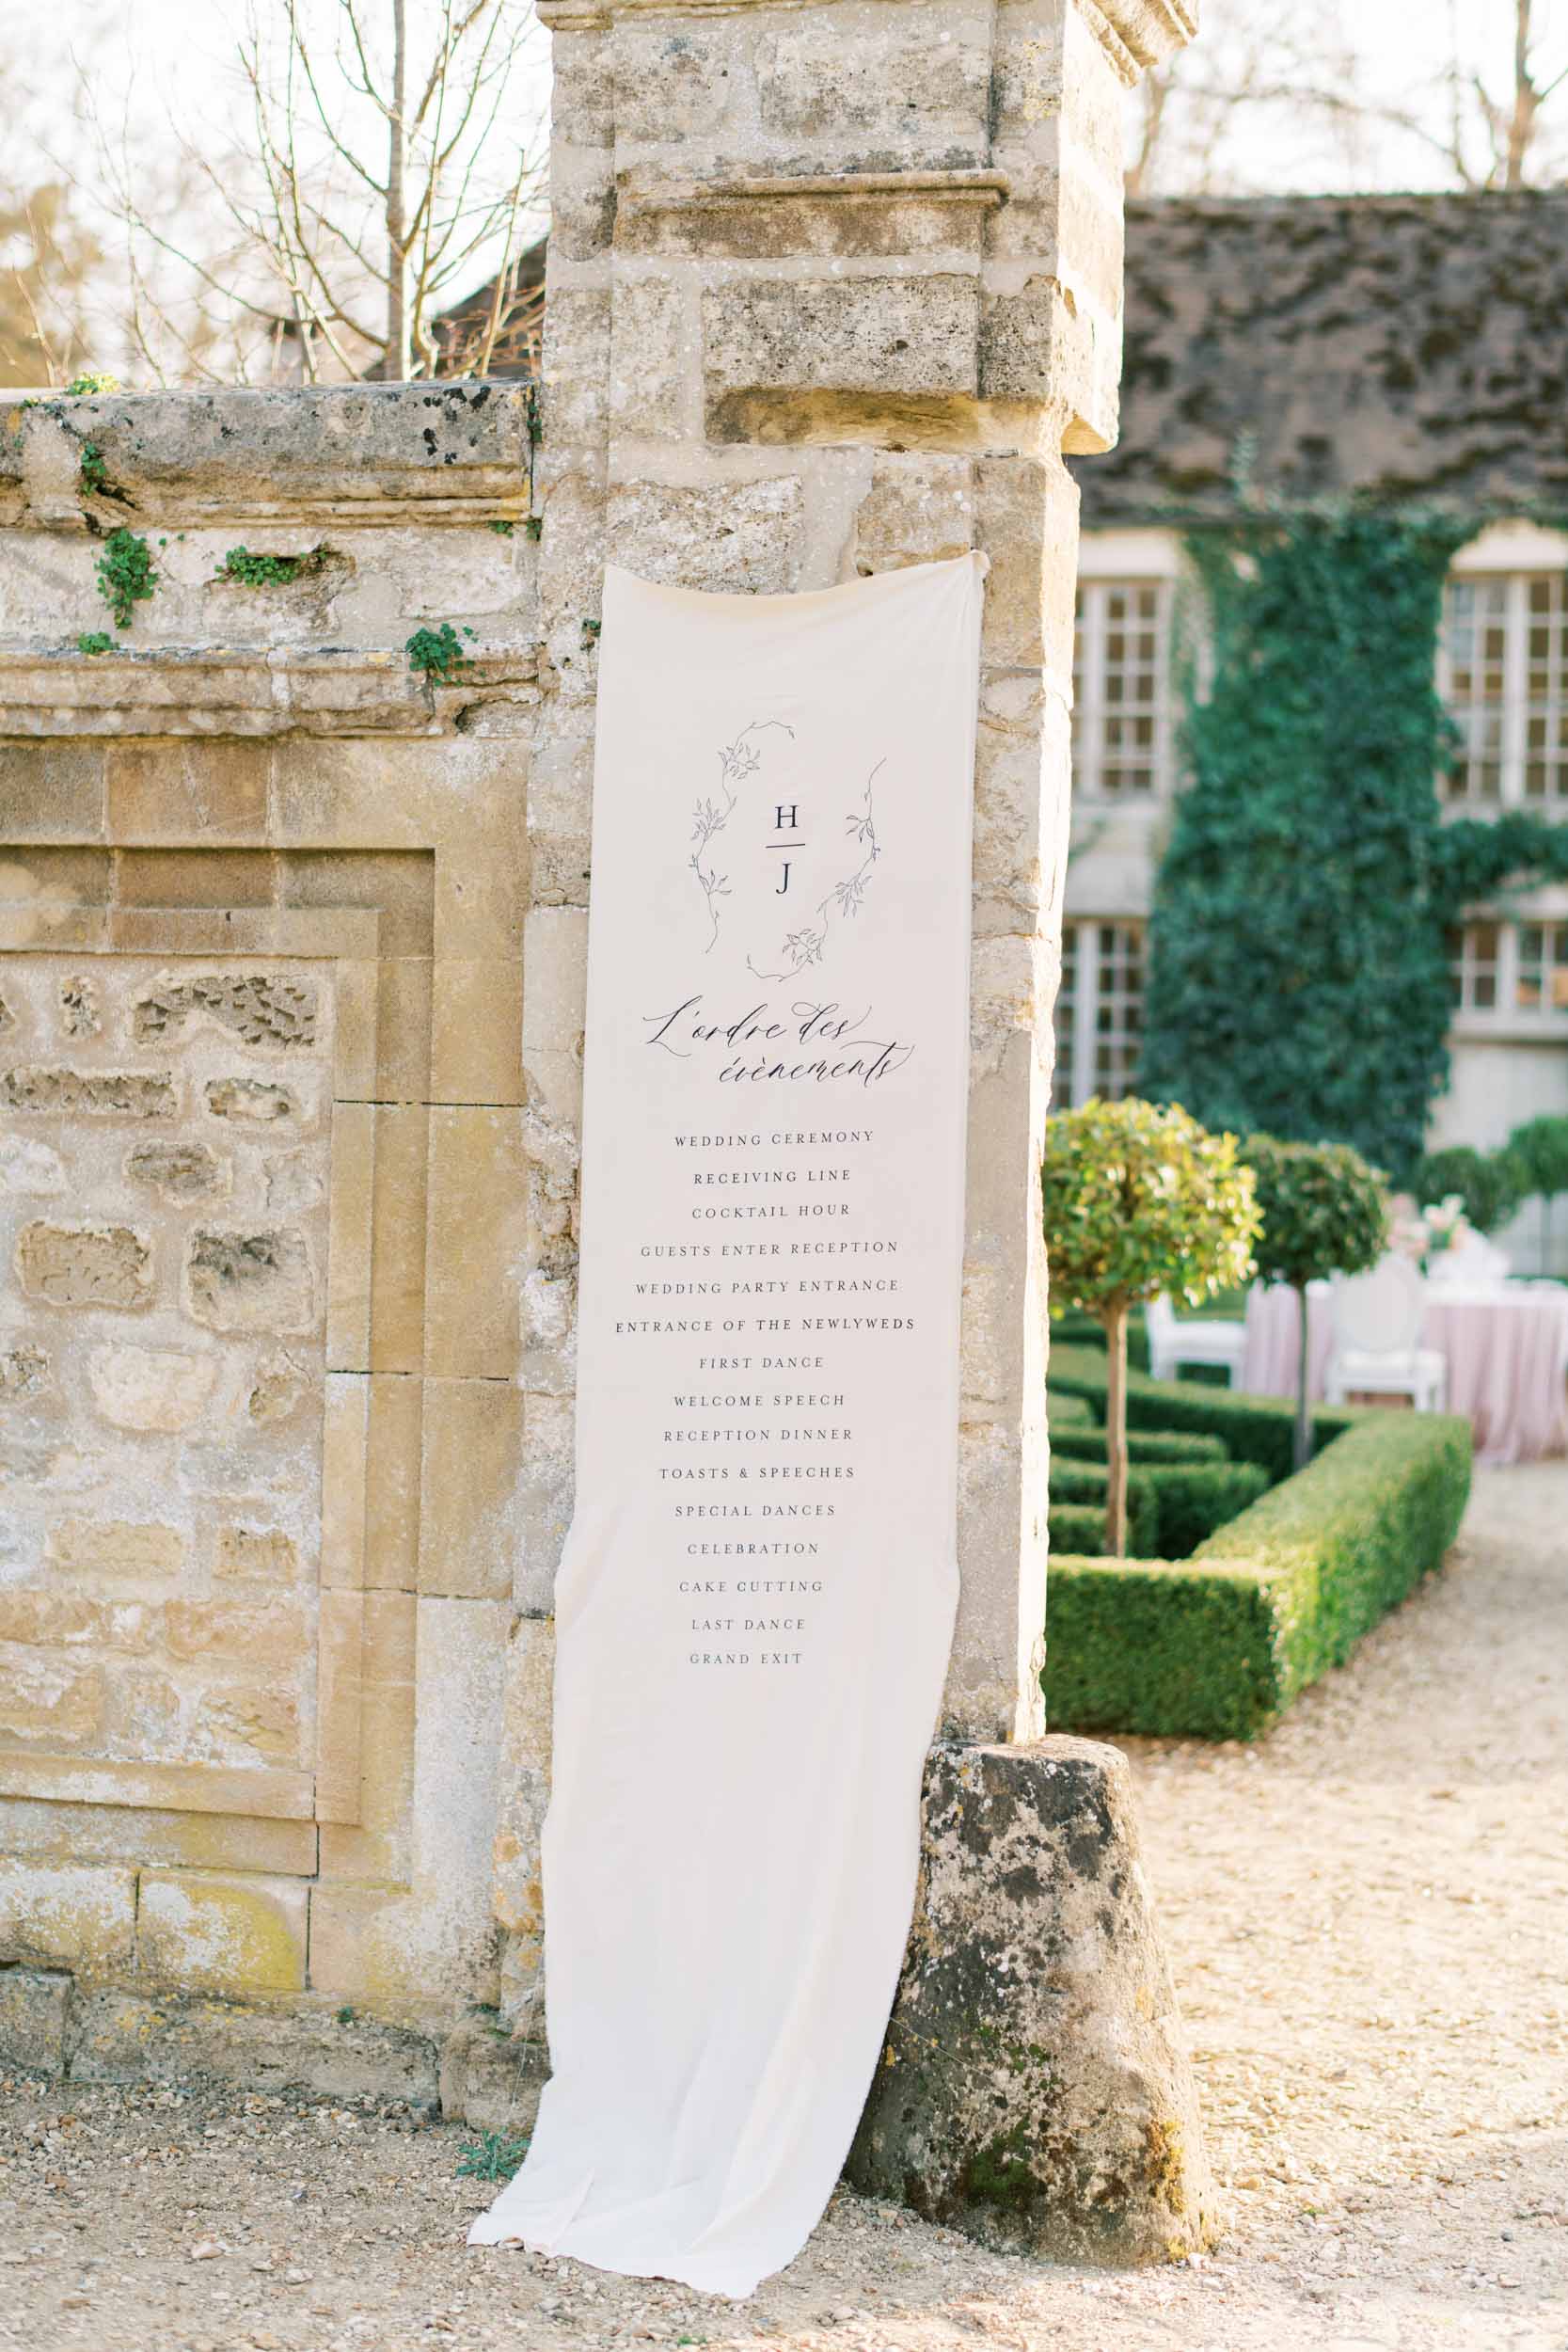 Paris chateau wedding timeline of events banner 